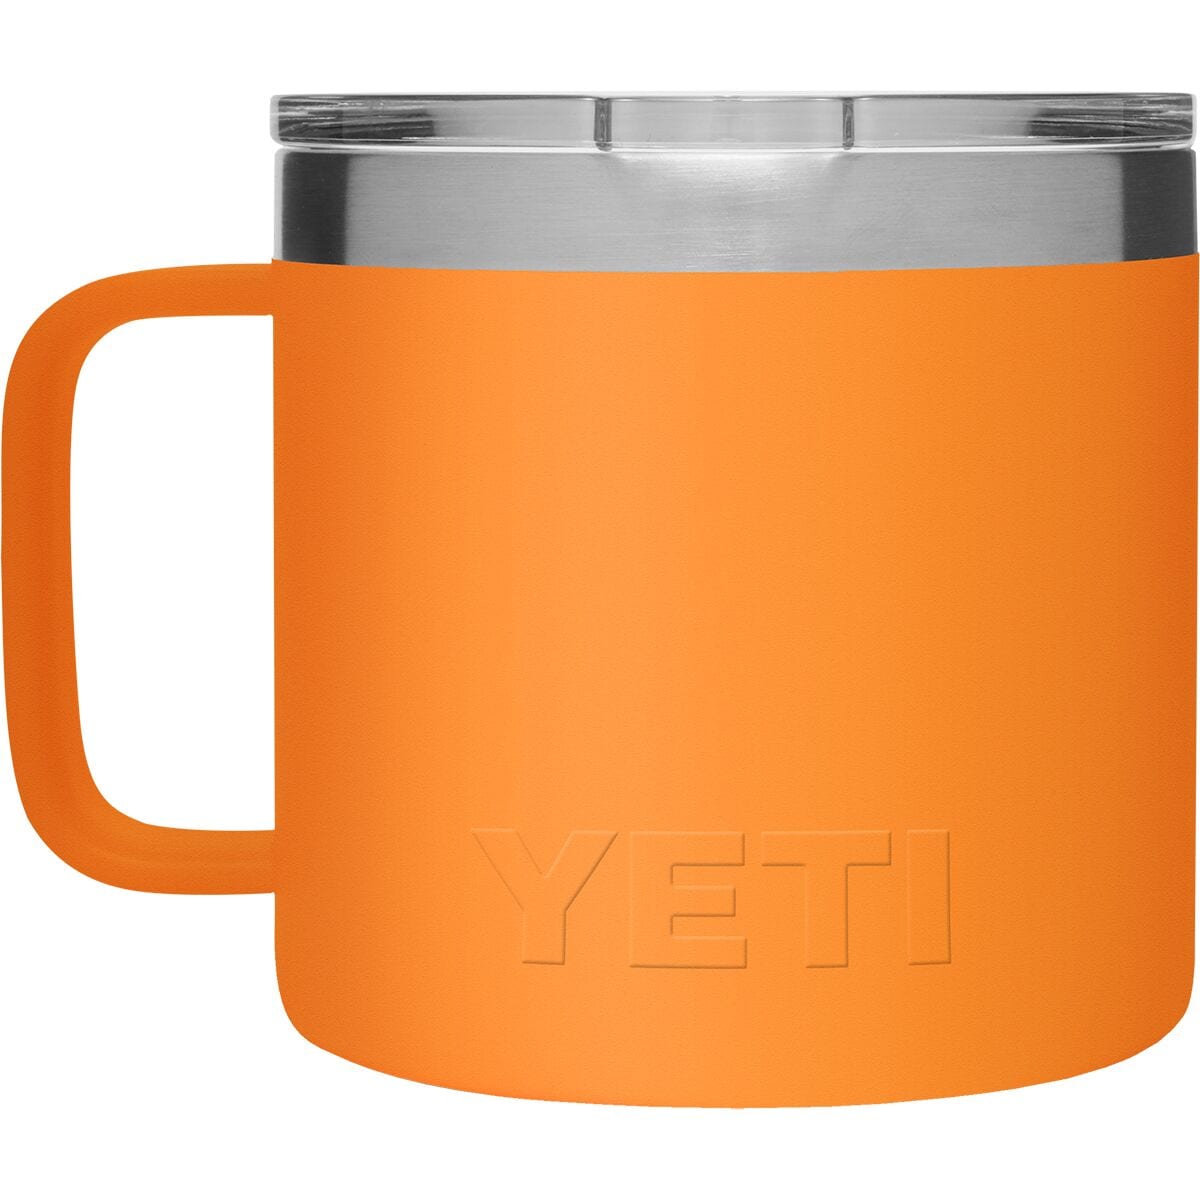 YETI Rambler 14oz Mug - Copper - TackleDirect